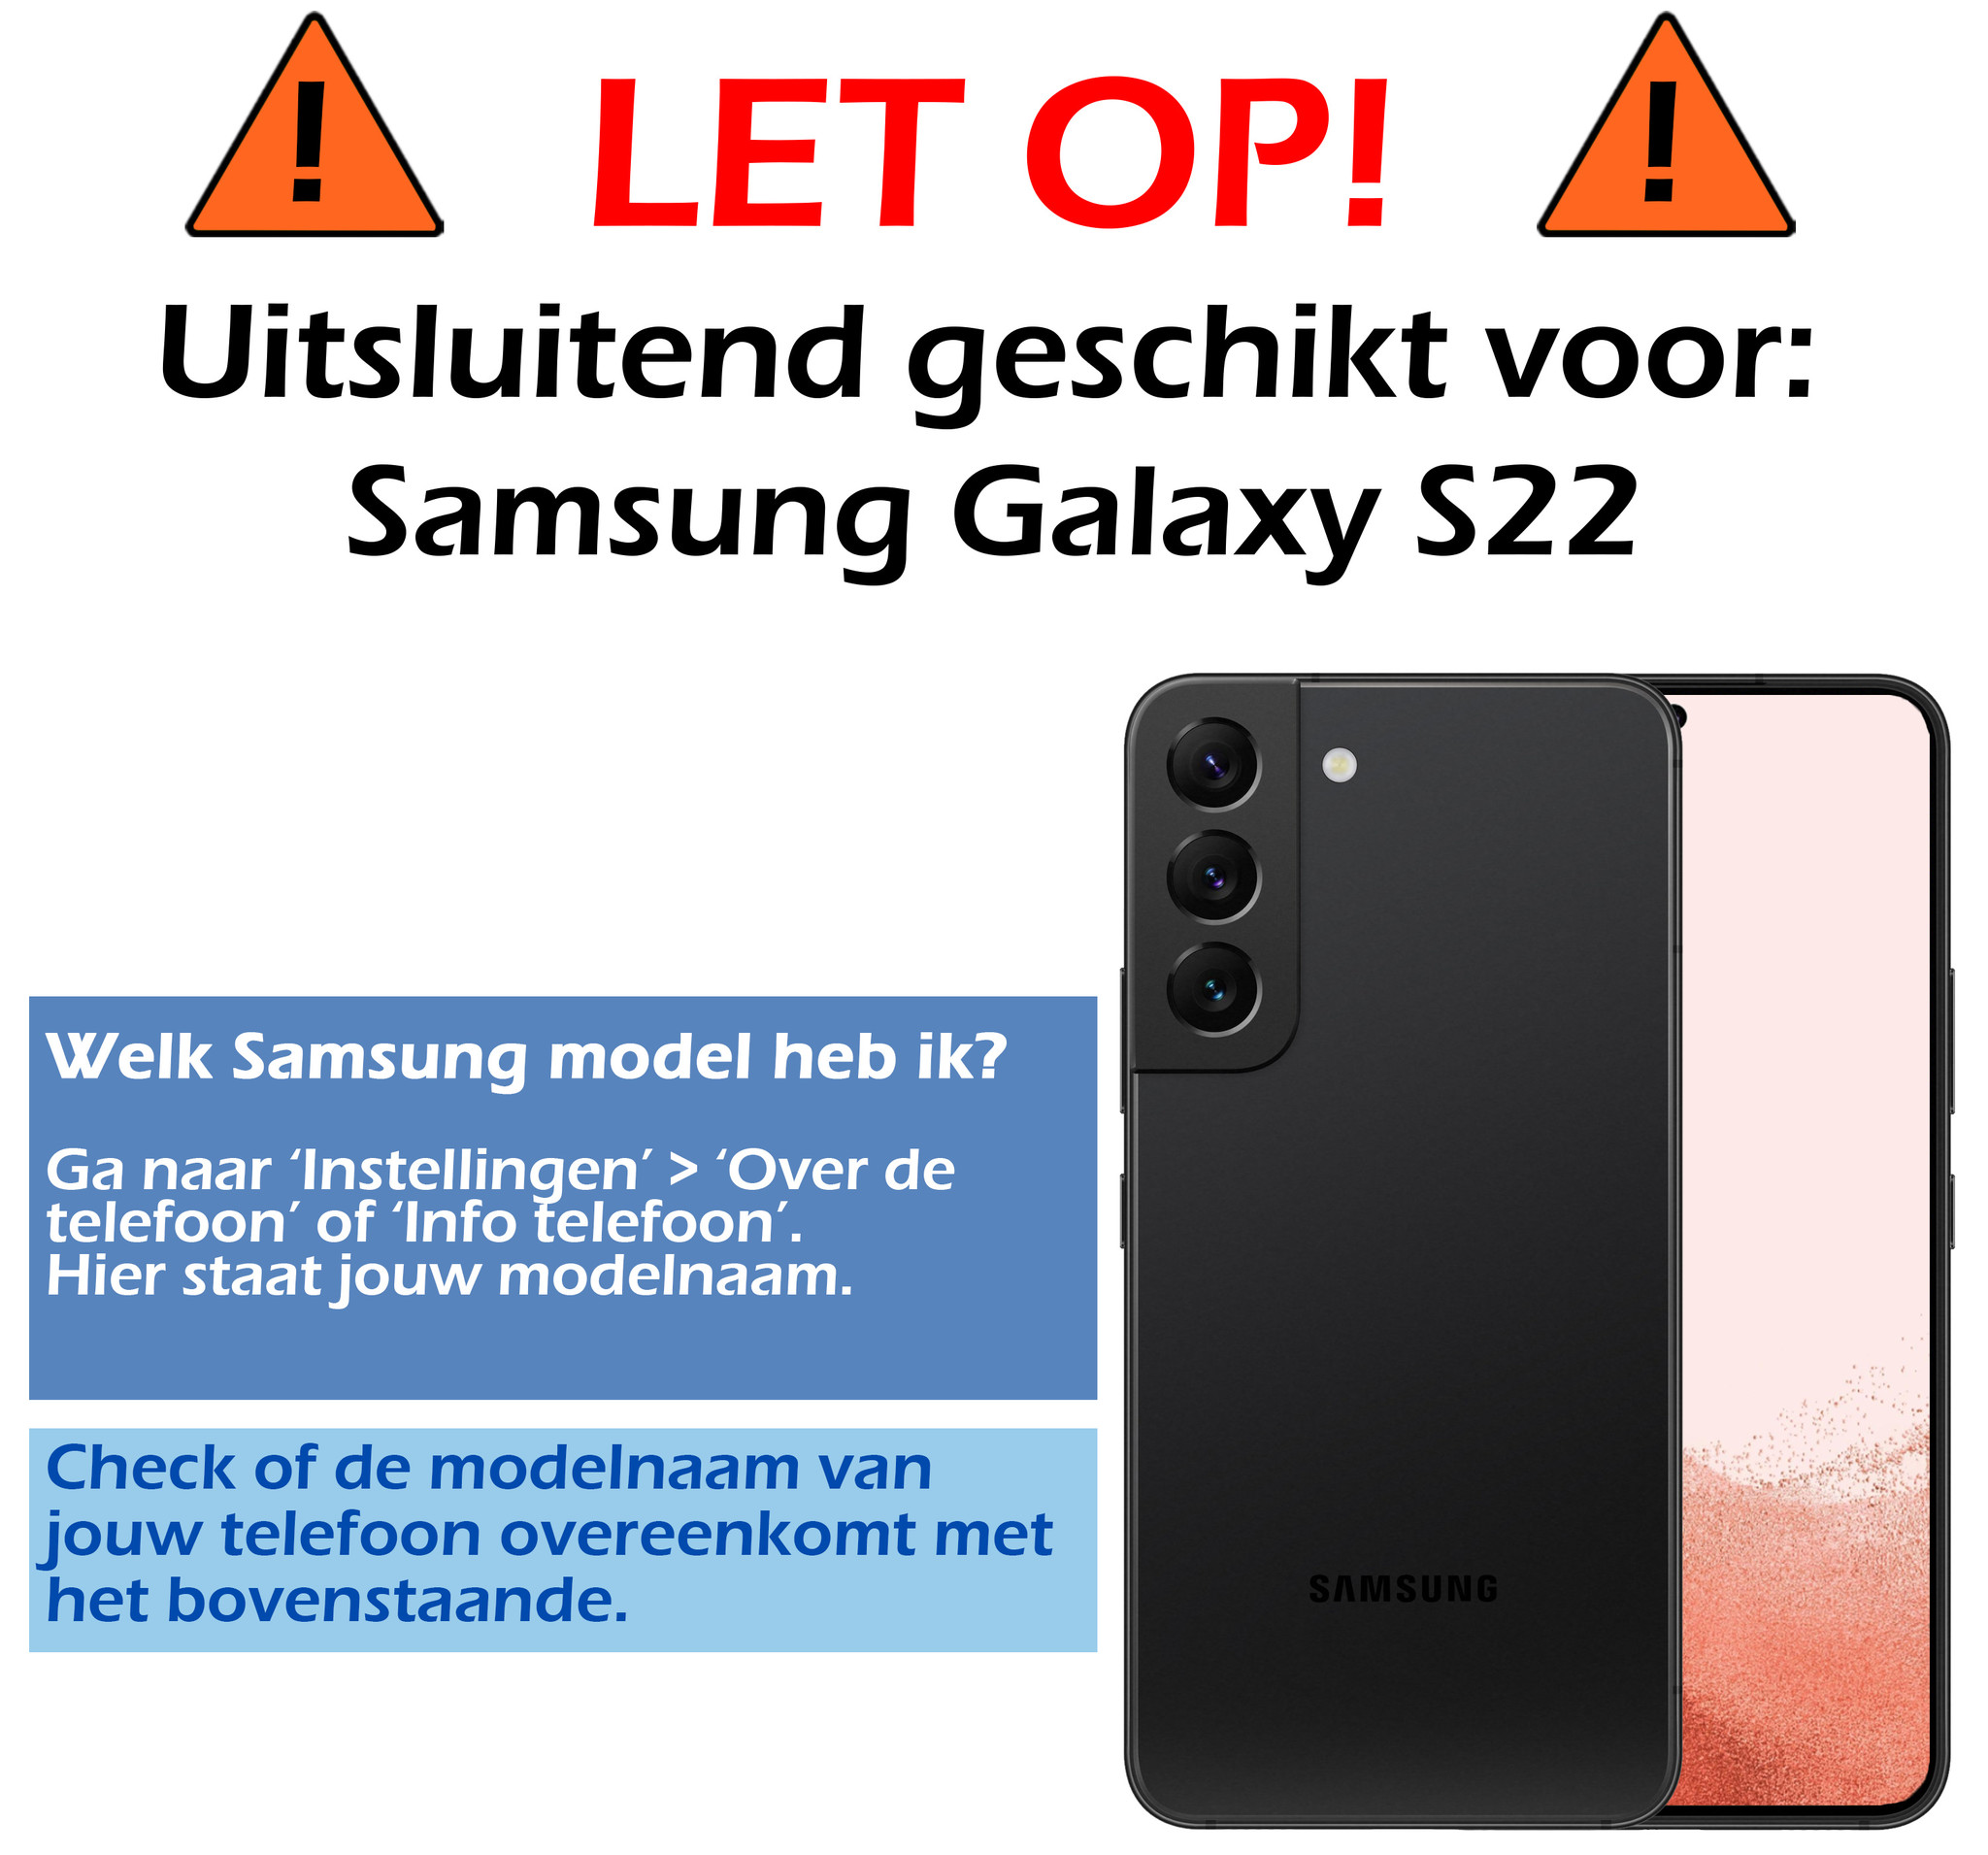 Samsung Galaxy S22 Camera Screen Protector Beschermglas - Samsung Galaxy S22 Camera Screenprotector Tempered Glass - 2x